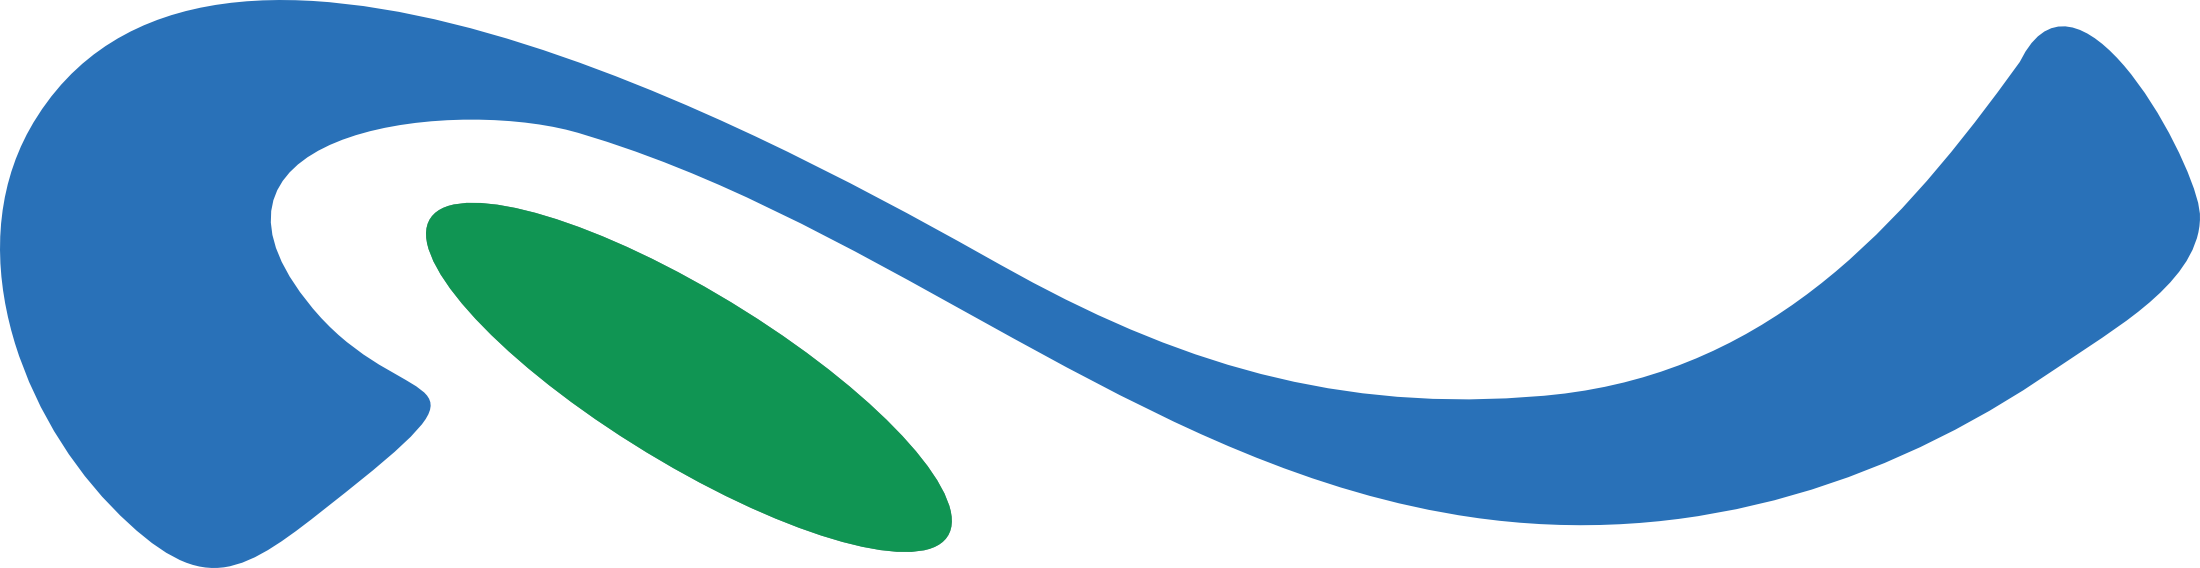 Cerex Monitoring Solutions Logo